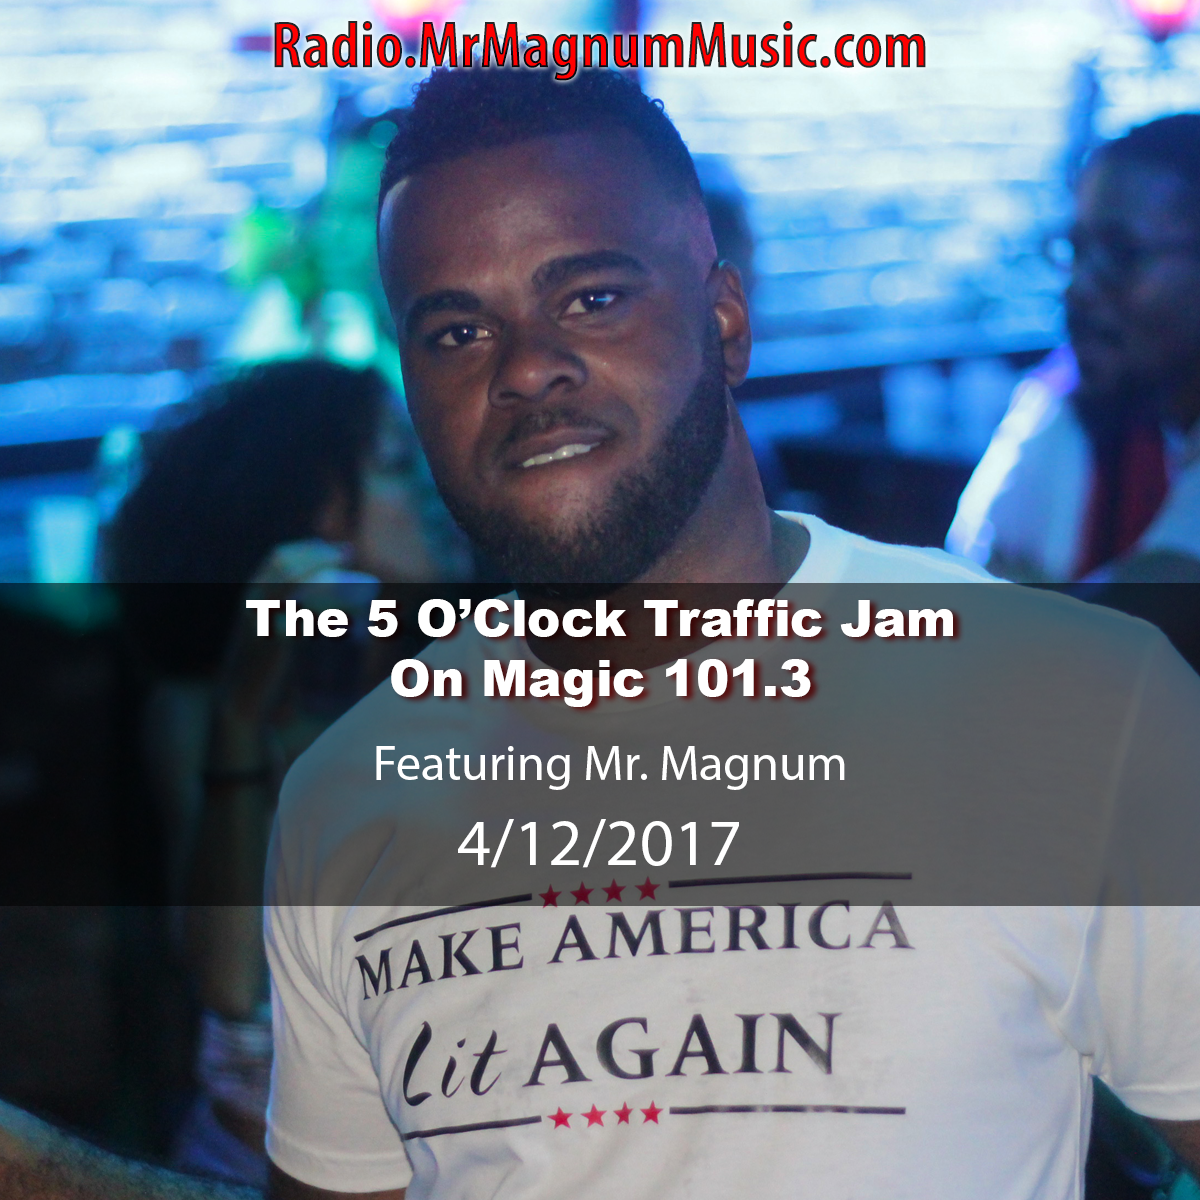 The 5 O'Clock Traffic Jam 20170412 featuring Gainesville's #1 DJ, Mr. Magnum on Magic 101.3